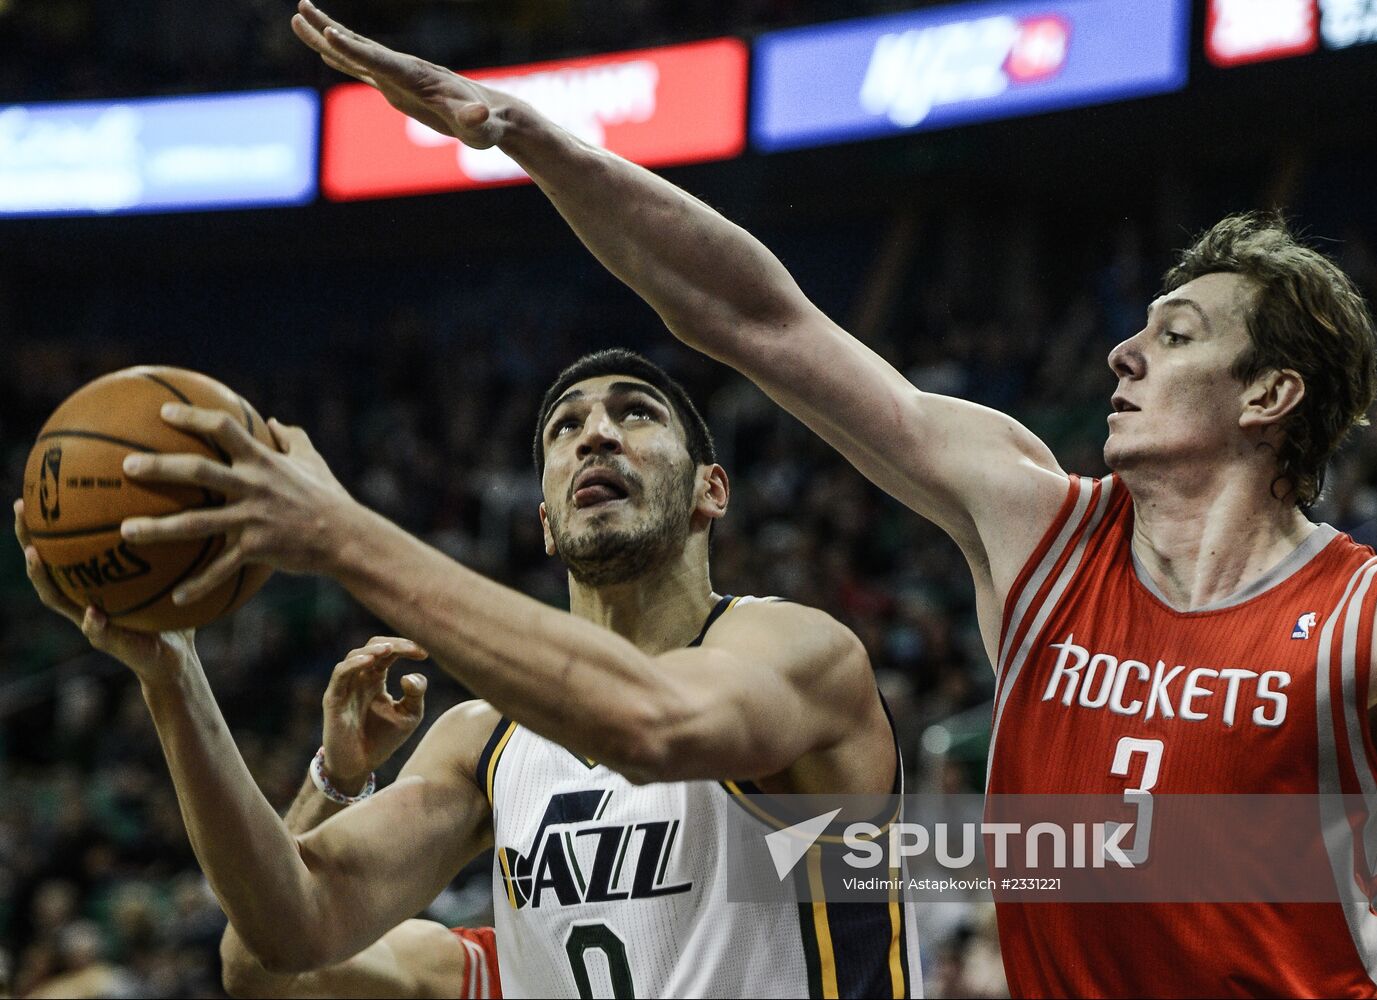 NBA Basketball. Utah Jazz vs. Houston Rockets